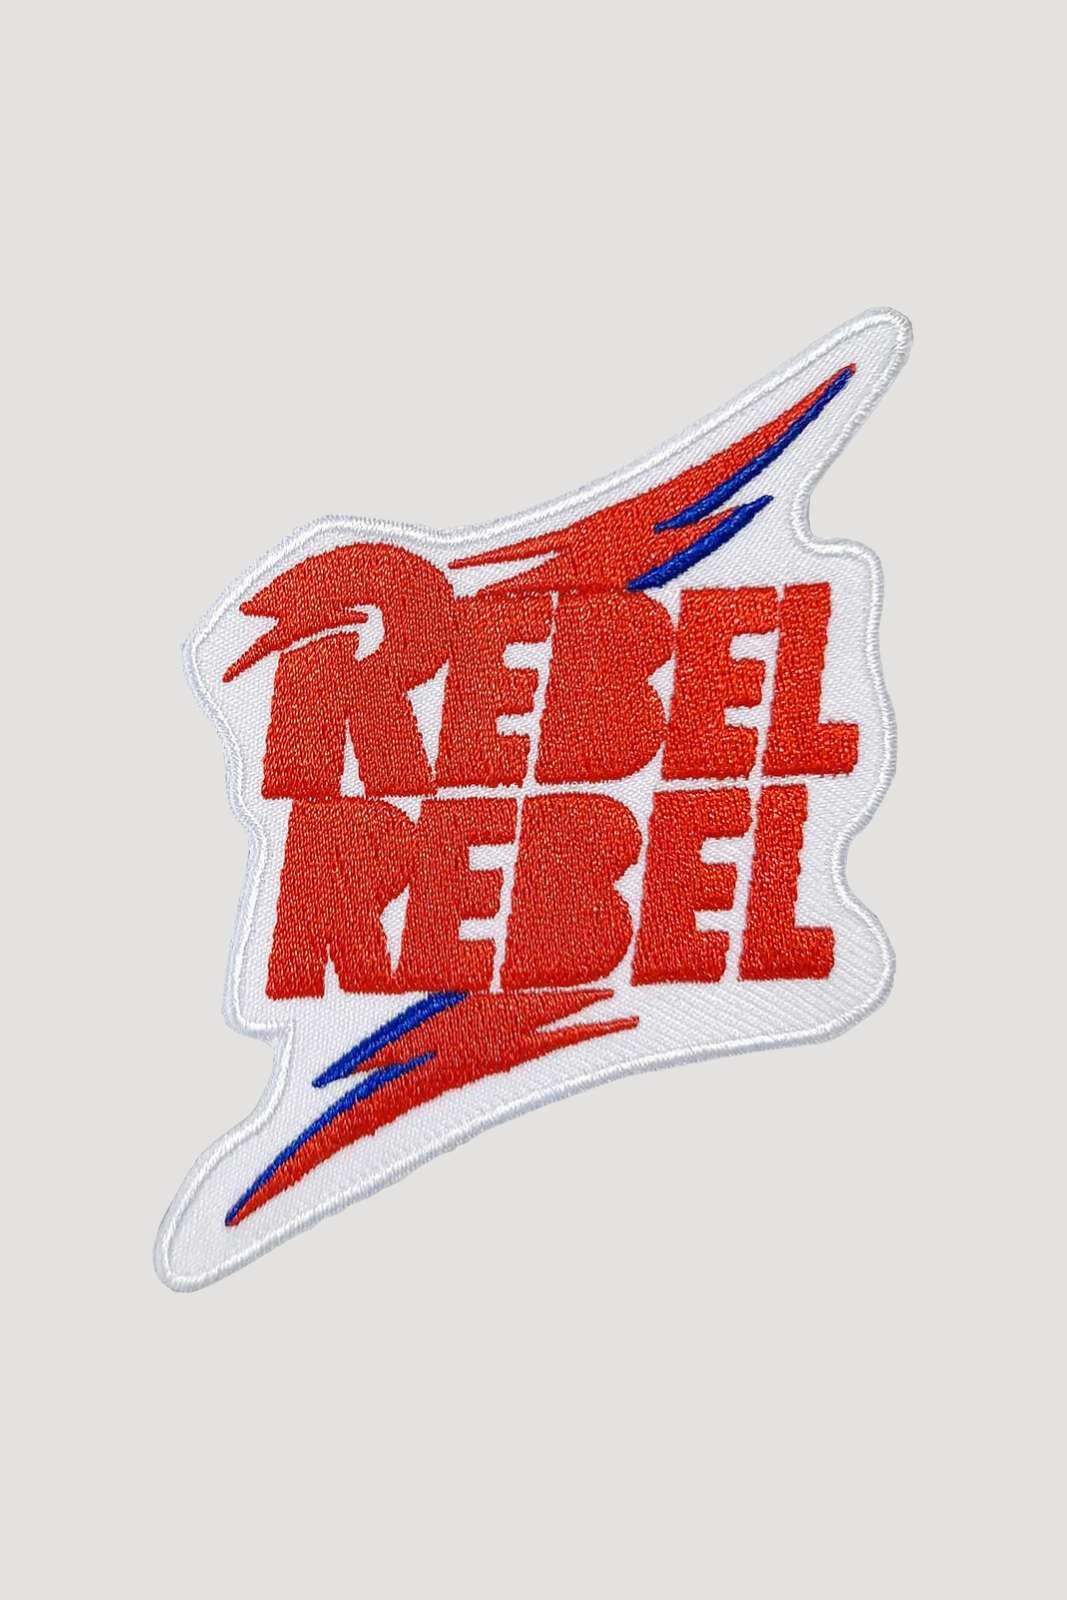 Bowie Rebel Rebel Patch